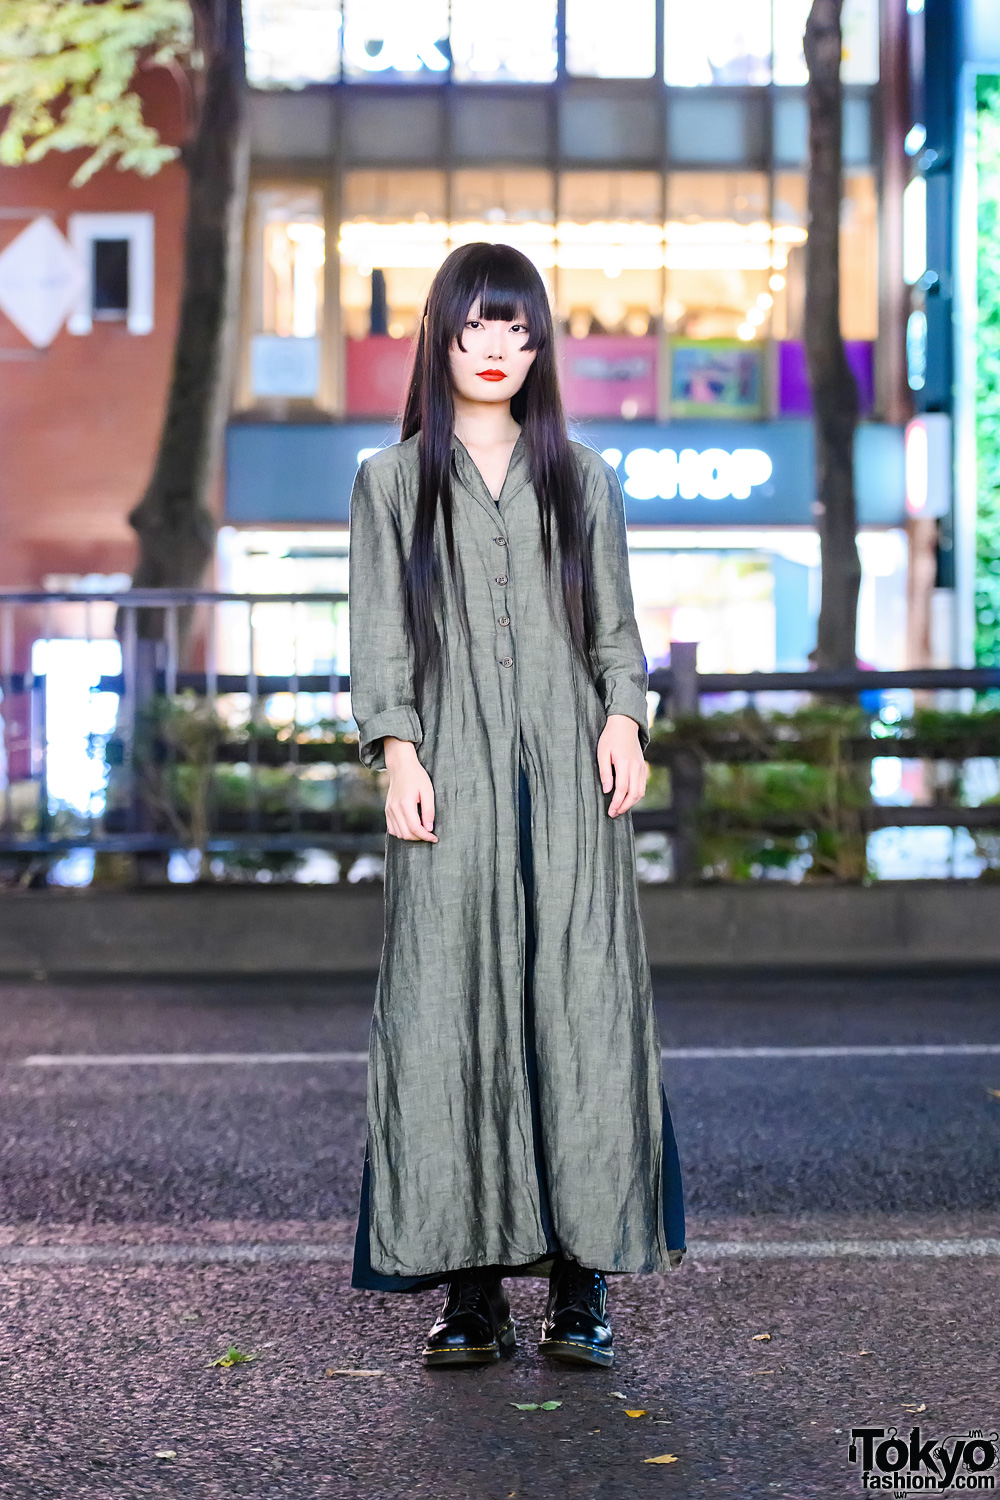 Minimalist Japanese Street Fashion w/ Long Black Hair Style, Vintage Linen Coat, Uniqlo, Muji & Dr. Martens Boots